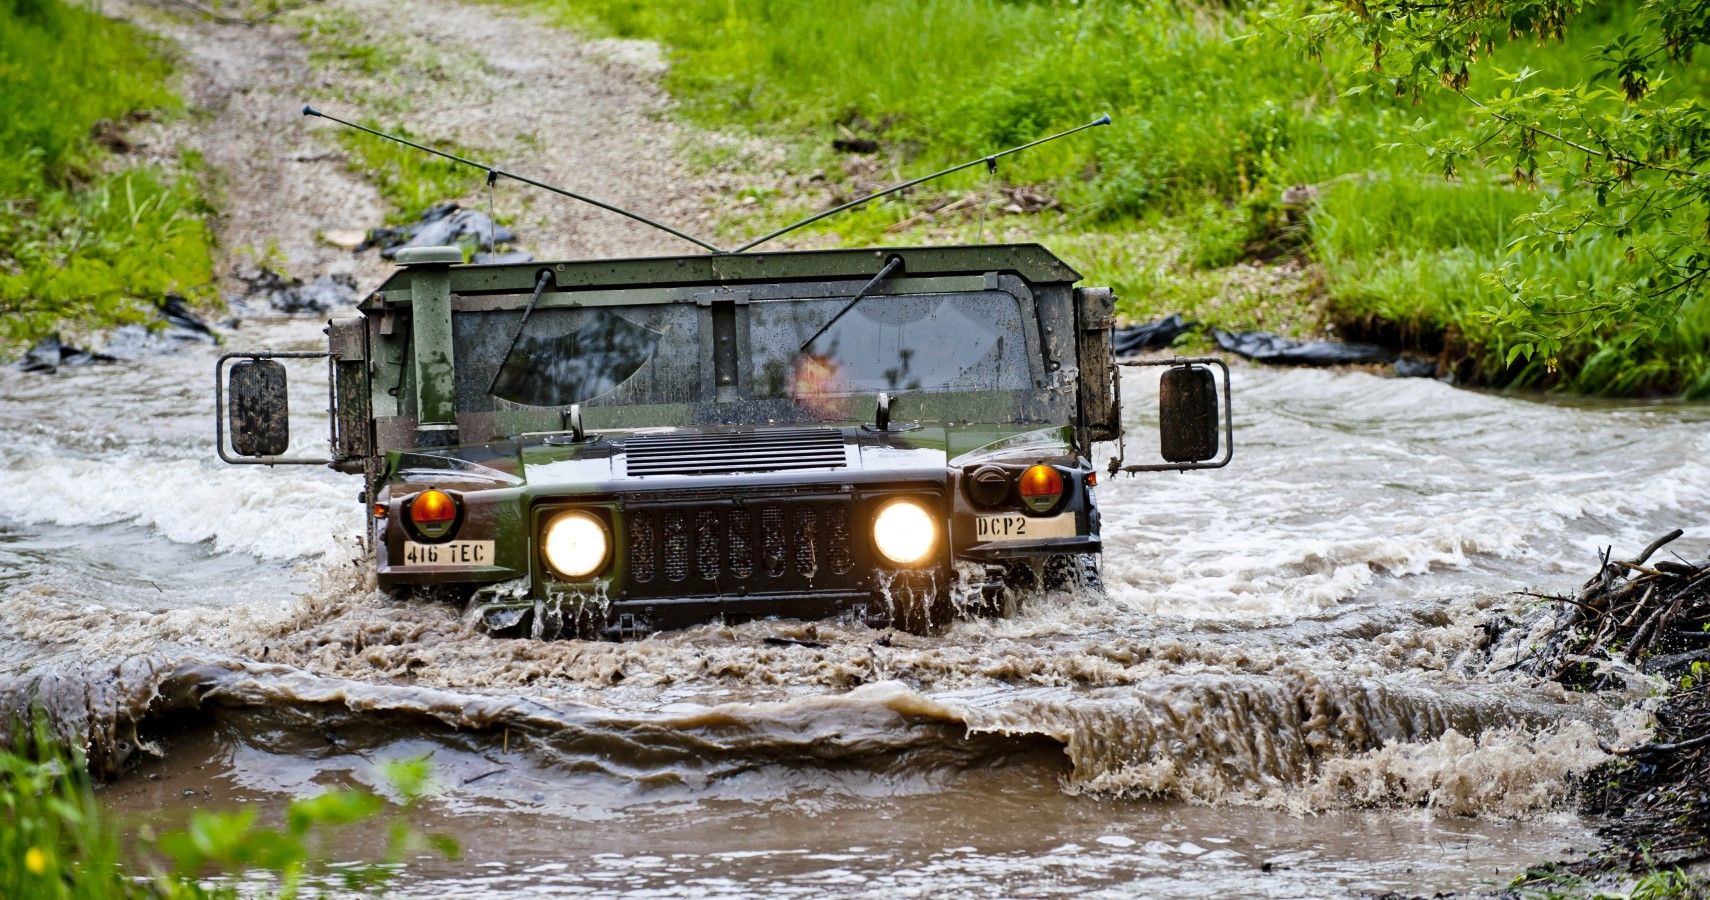 A Humvee in water